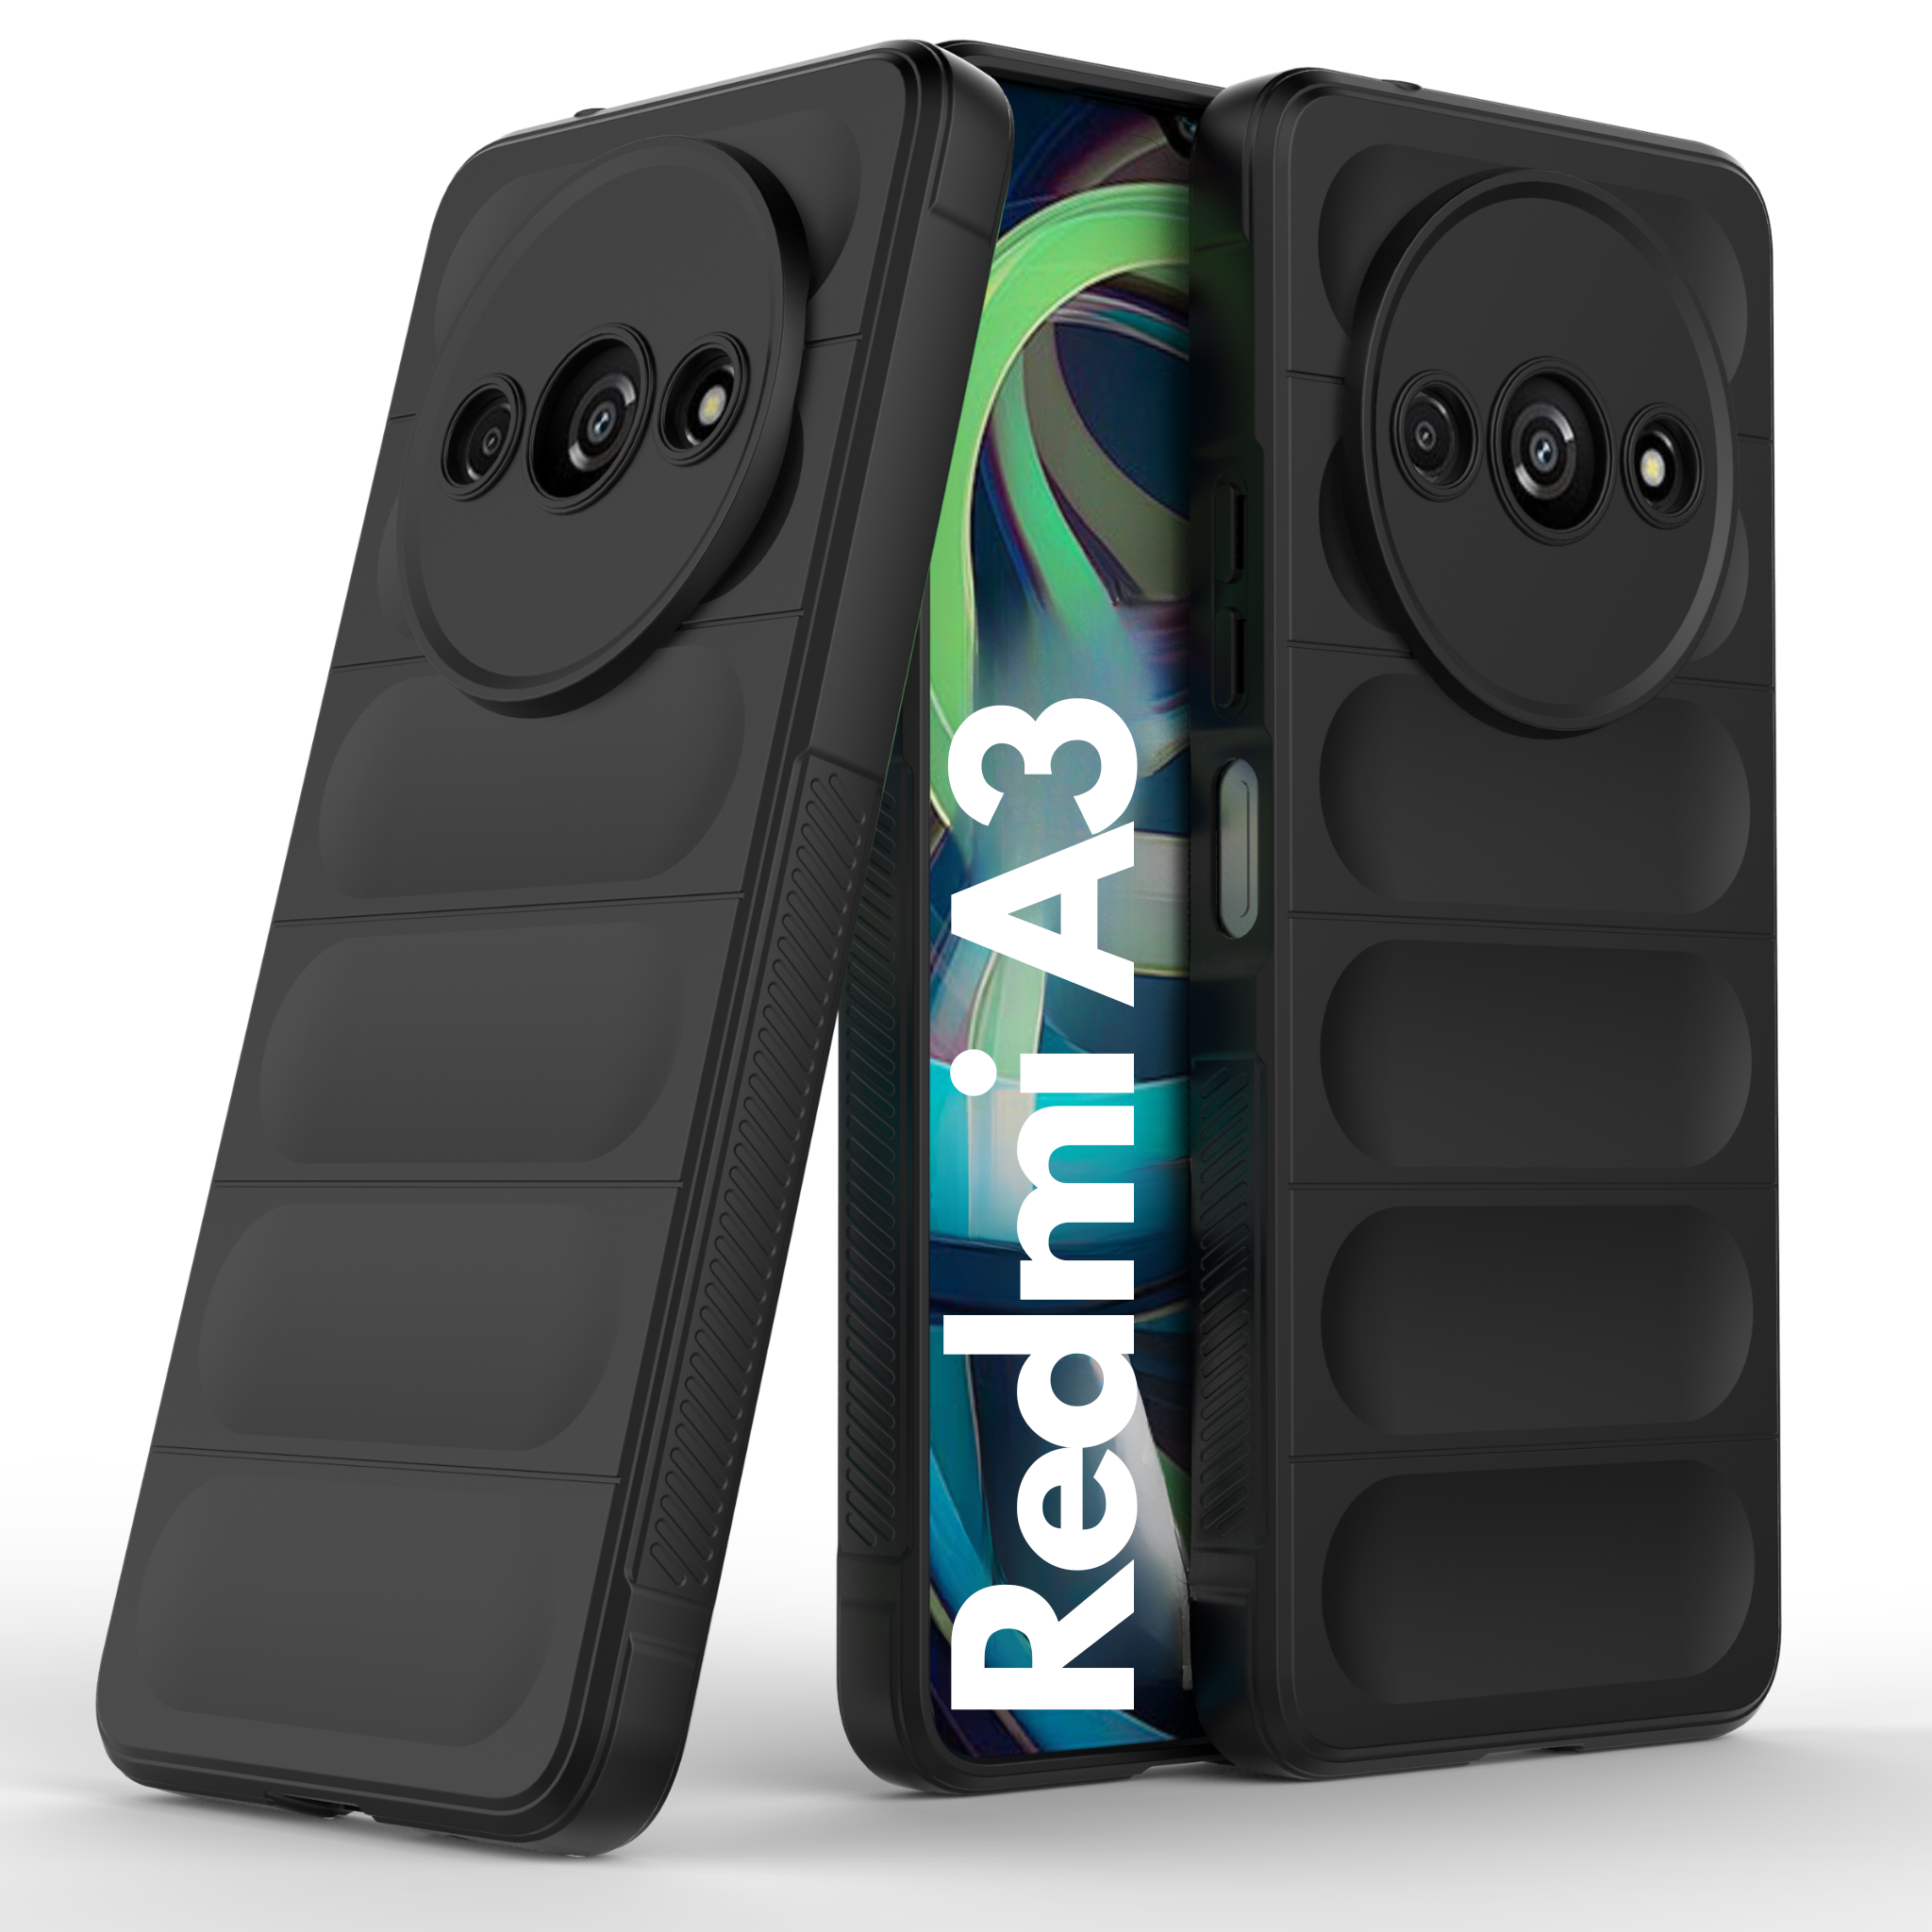 Redmi A3 Magic Shield Case Shockproof Cover